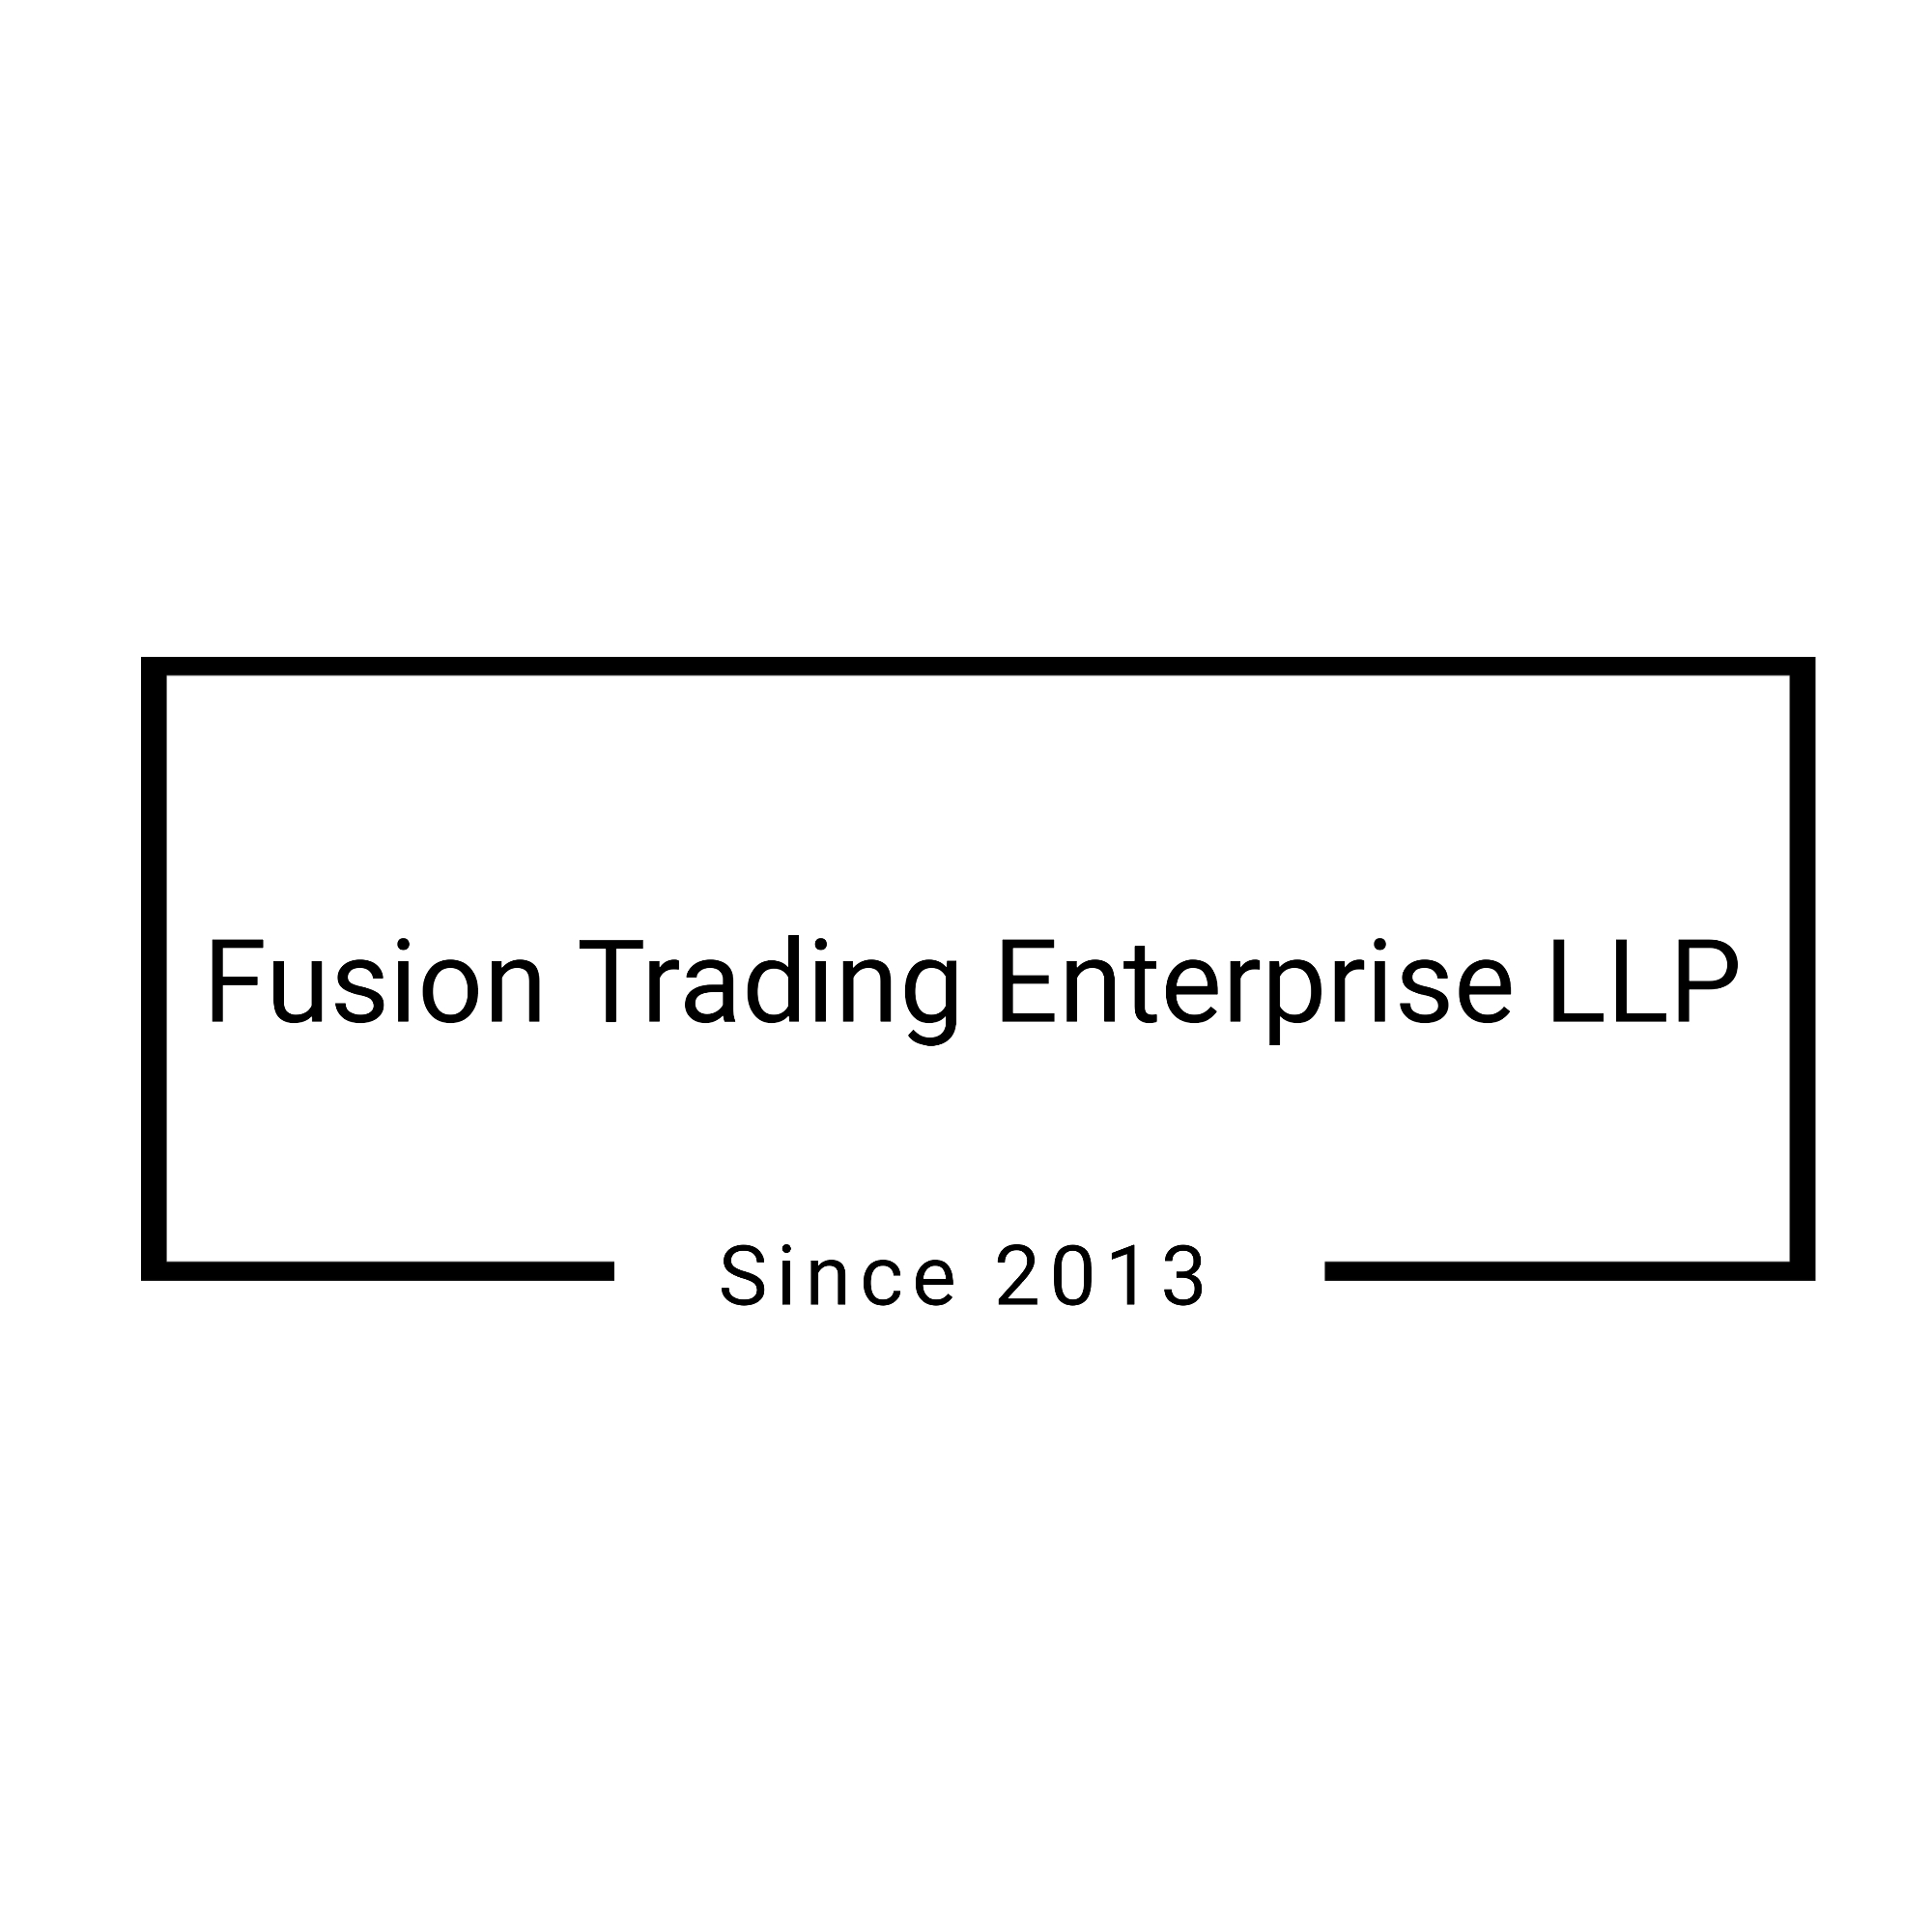 Fusion Trading Enterprise LLP